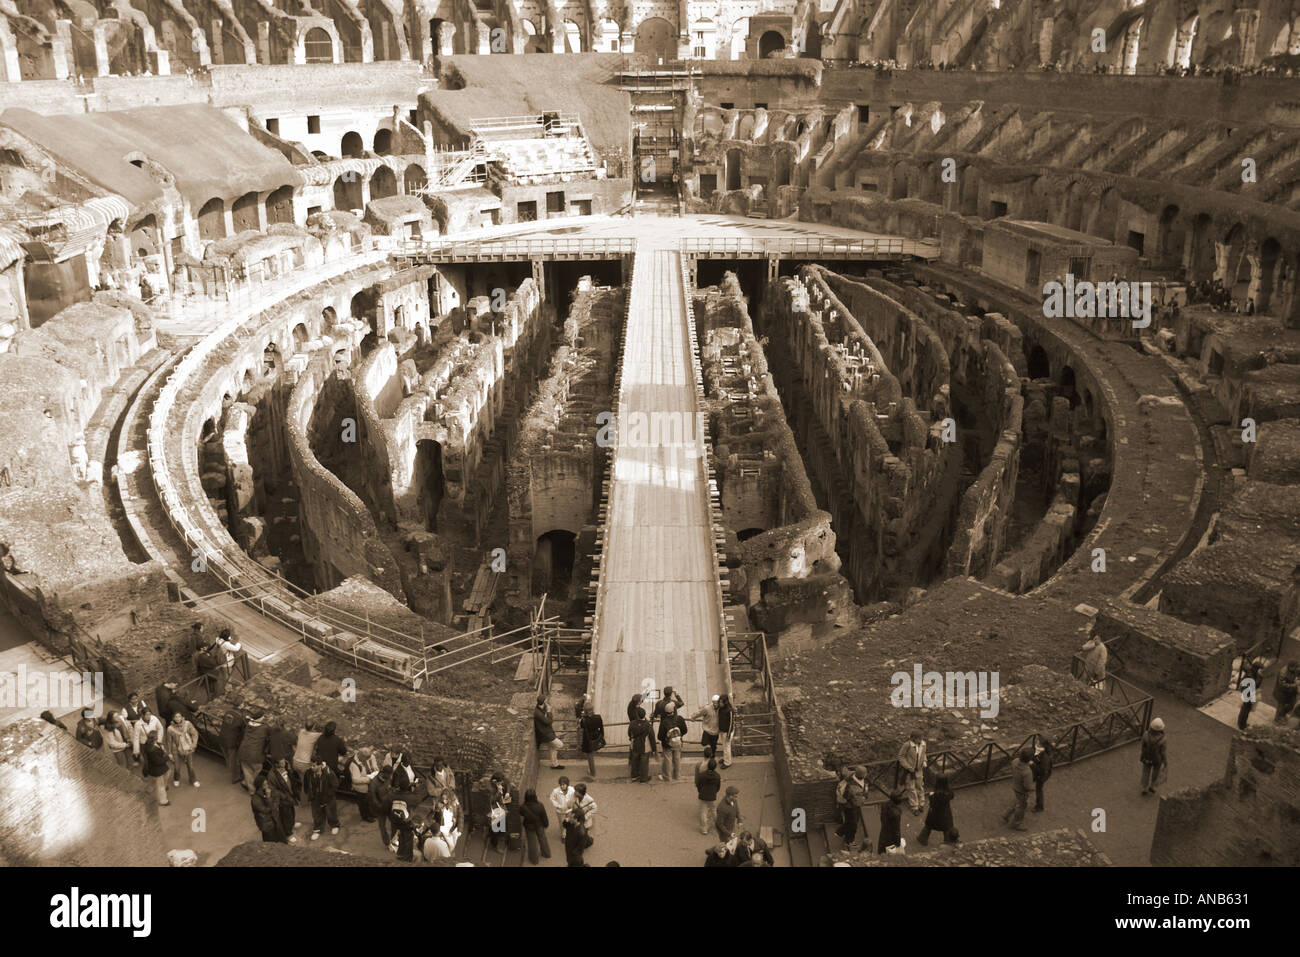 El interior del Coliseo, Roma Foto de stock